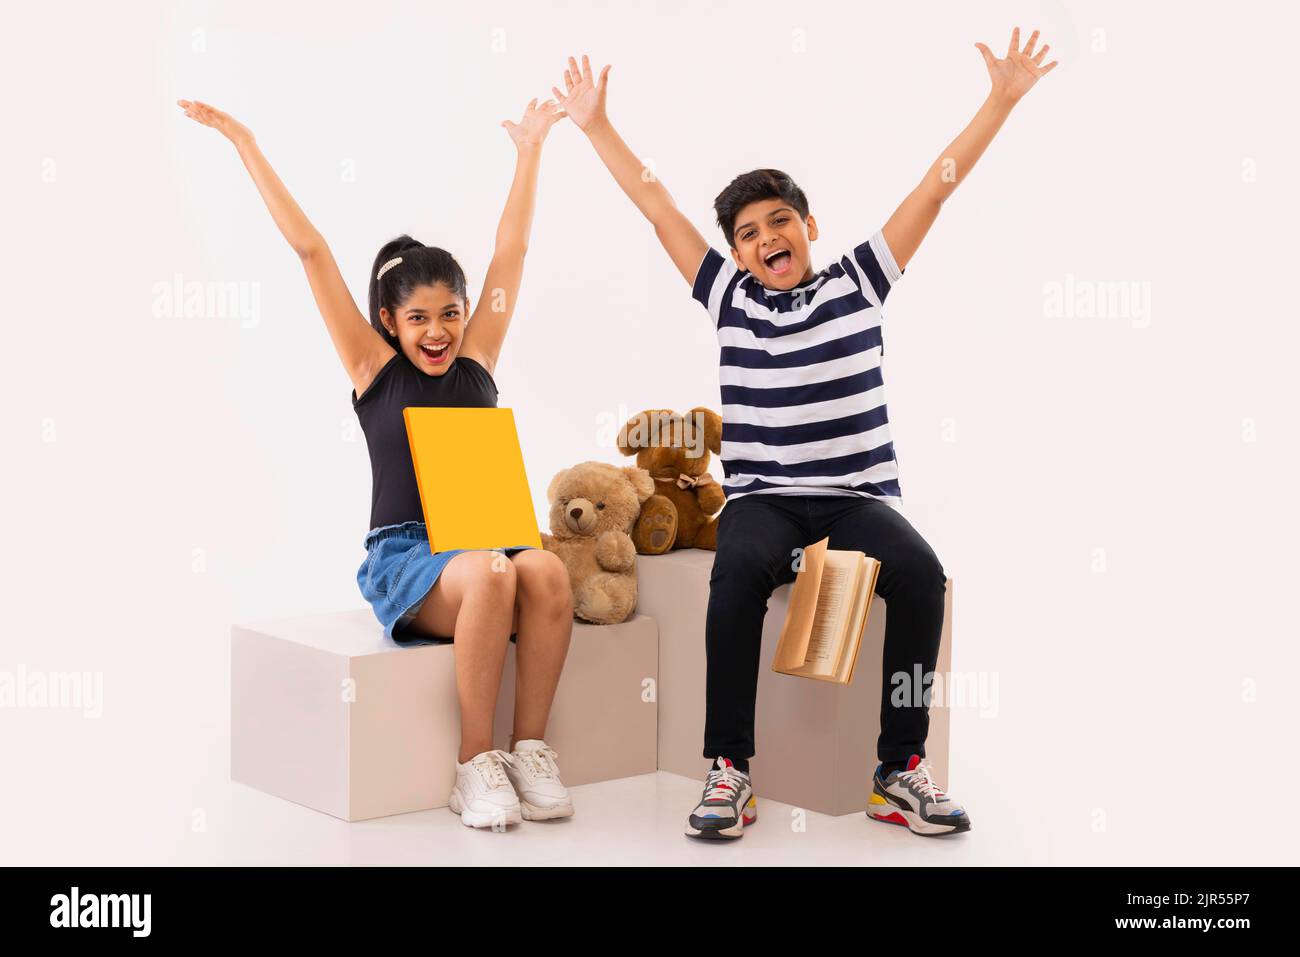 Portrait of two children having fun against white background Stock Photo